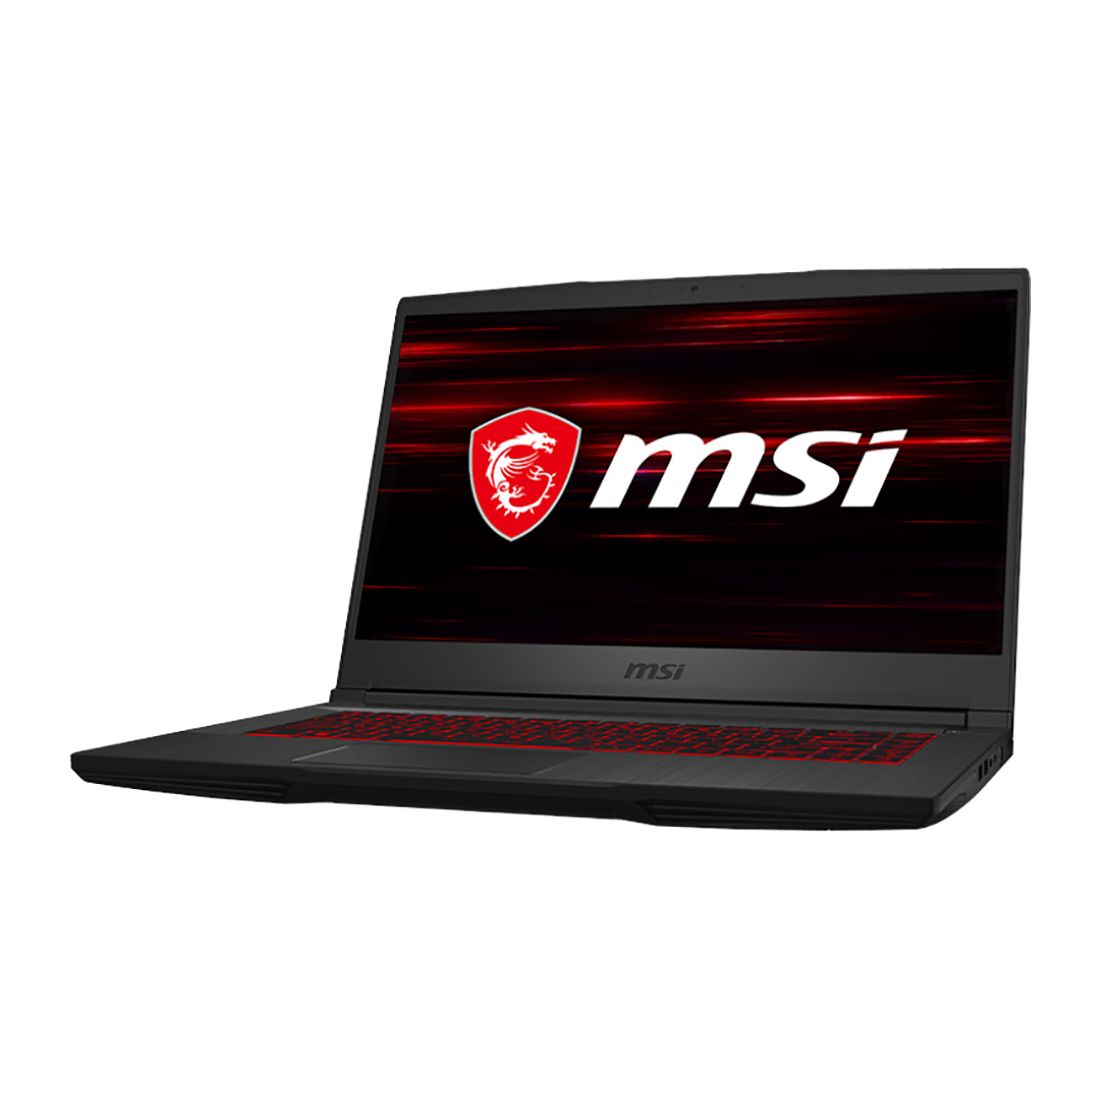 MSI GF65 Thin 10SDR Gaming Laptop i7-10750H/16GB/512GB SSD/NVIDIA GeForce Btx 1660 Ti 6GB/15.6 inch FHD/144Hz/Windows 10 Home